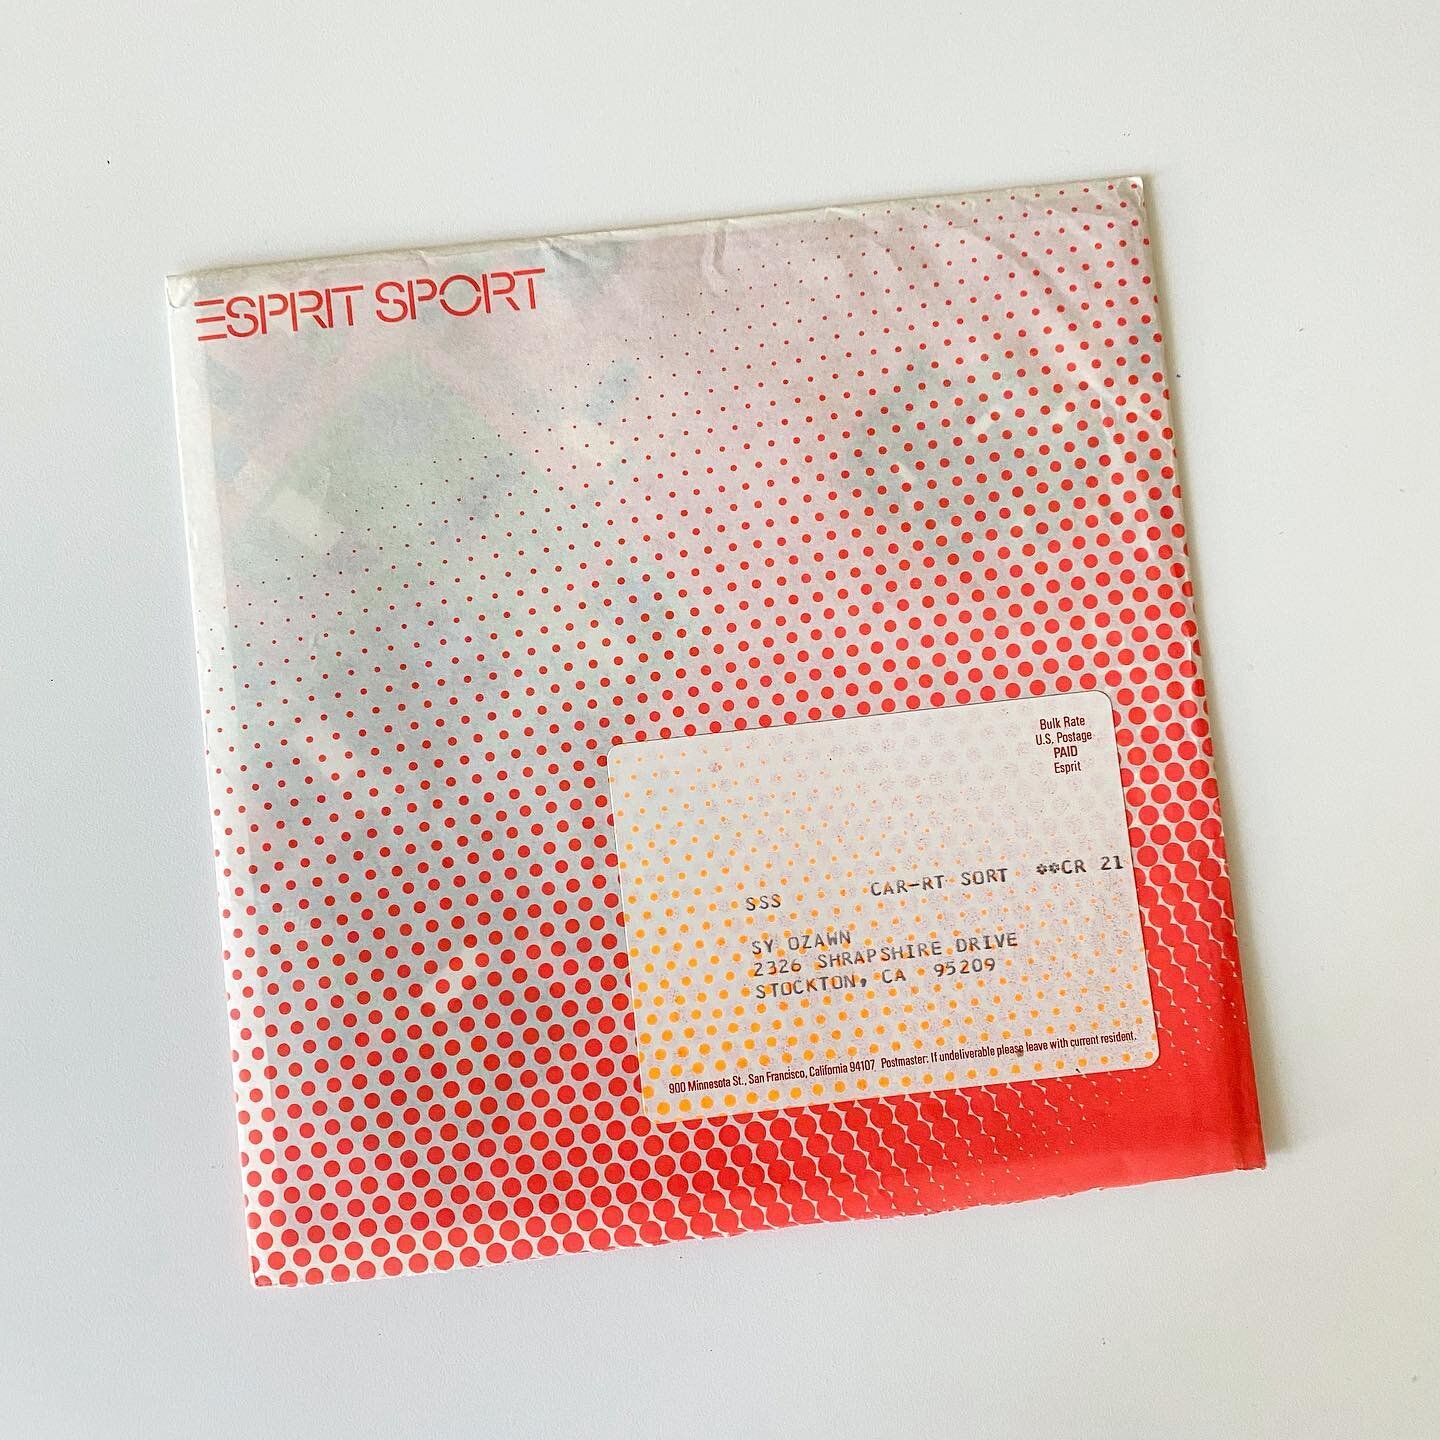 Winter 1986 Esprit Sport catalog envelope. ❄️
.
.
.
.
.
.
.
.
.
#esprit #vintageesprit #espritthrowback #espritarchive #espritflashback #halftone #graphicdesign #envelope #catalog #mail #monday #80s #80sdesign #1986 #shipping #square